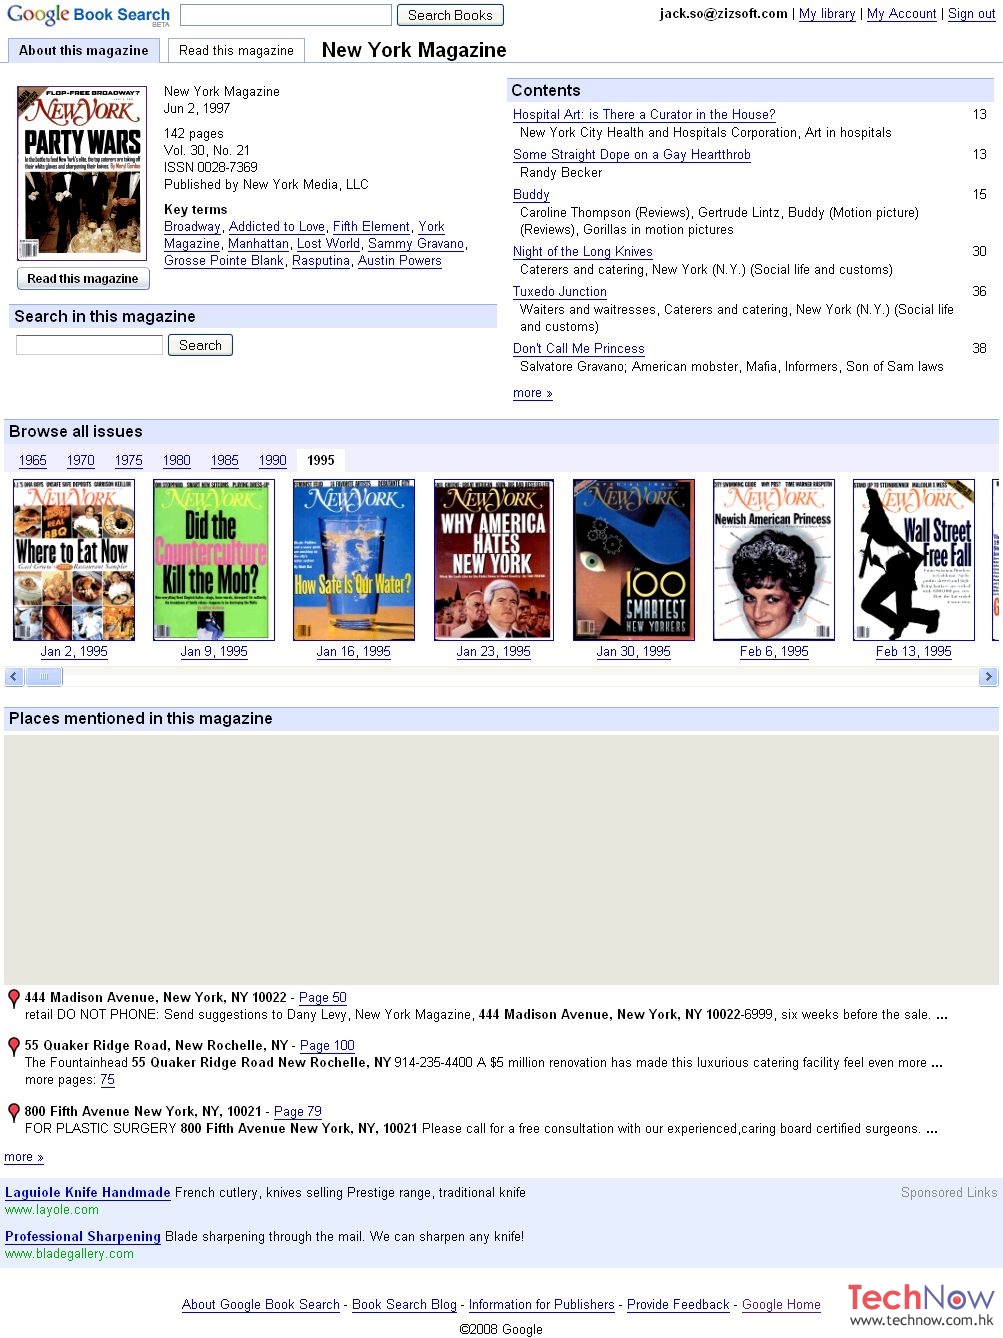 fireshot-capture-320-new-york-magazine-google-book-search-books_google_com_books_idougcaaaambaj